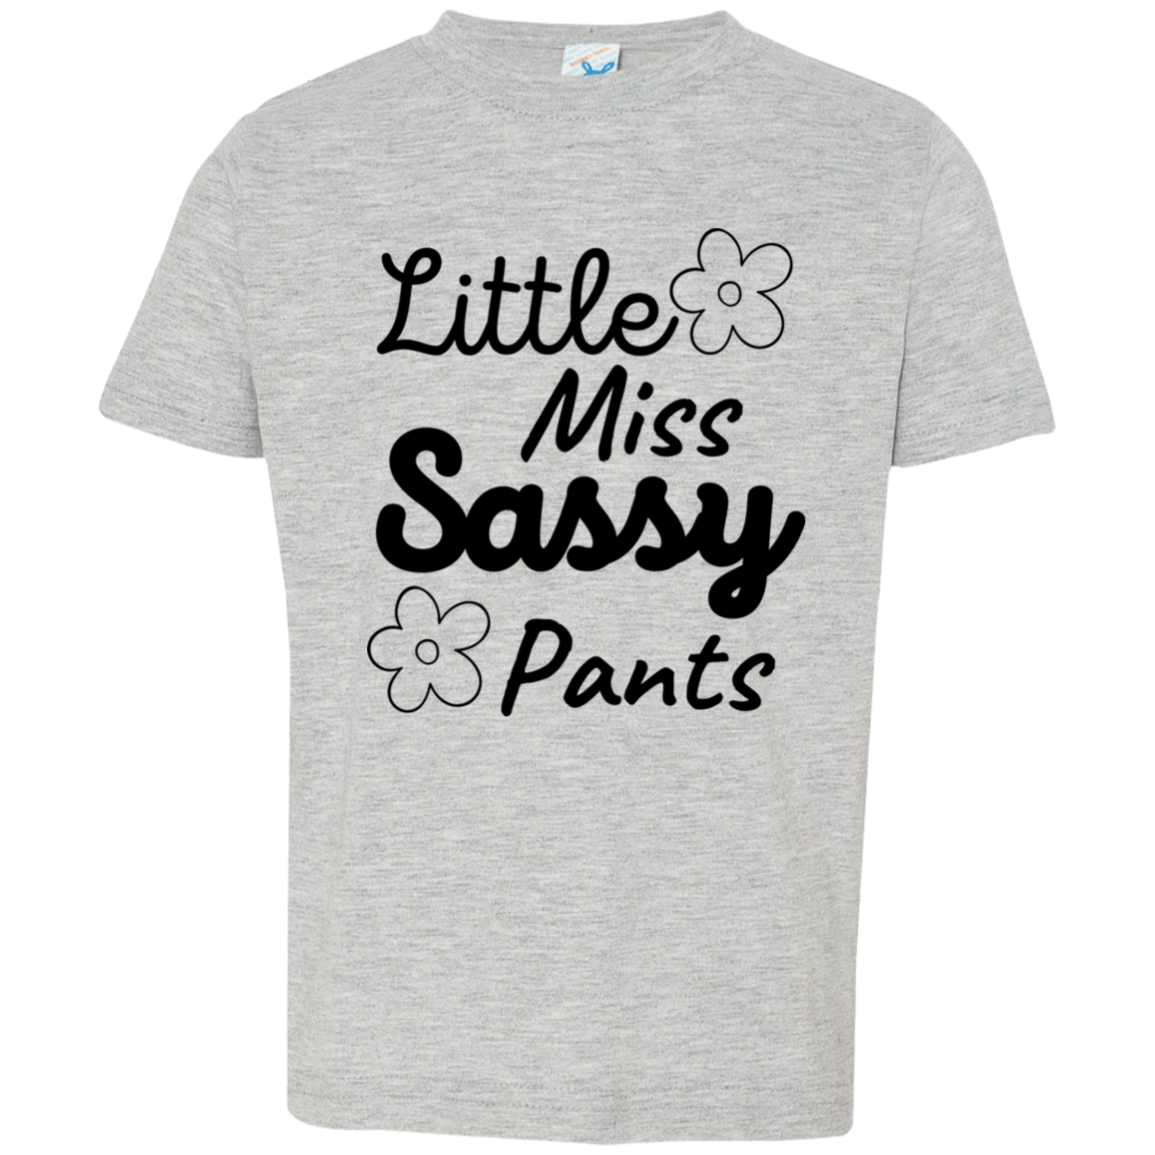 Little miss Sassy pants!